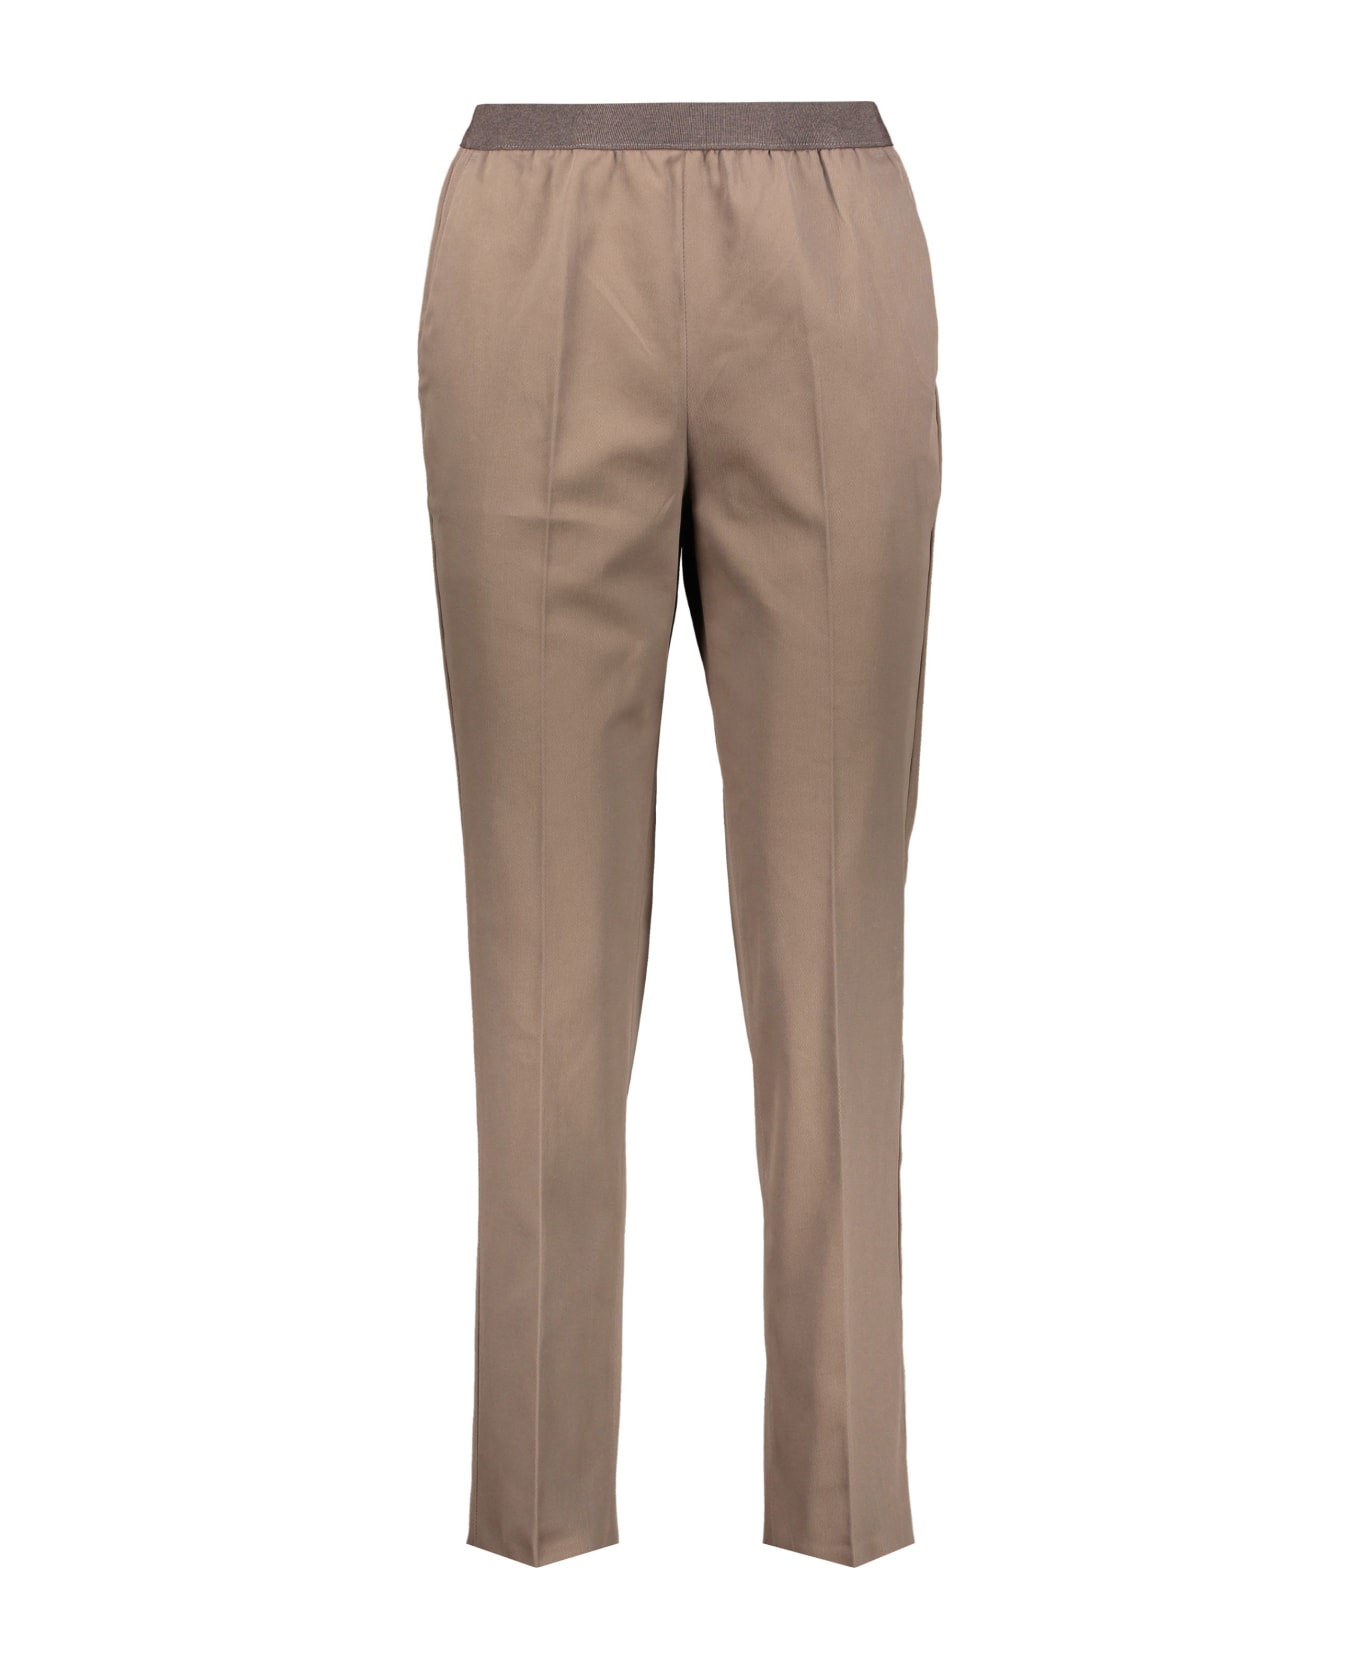 Agnona Cotton Trousers - brown ボトムス